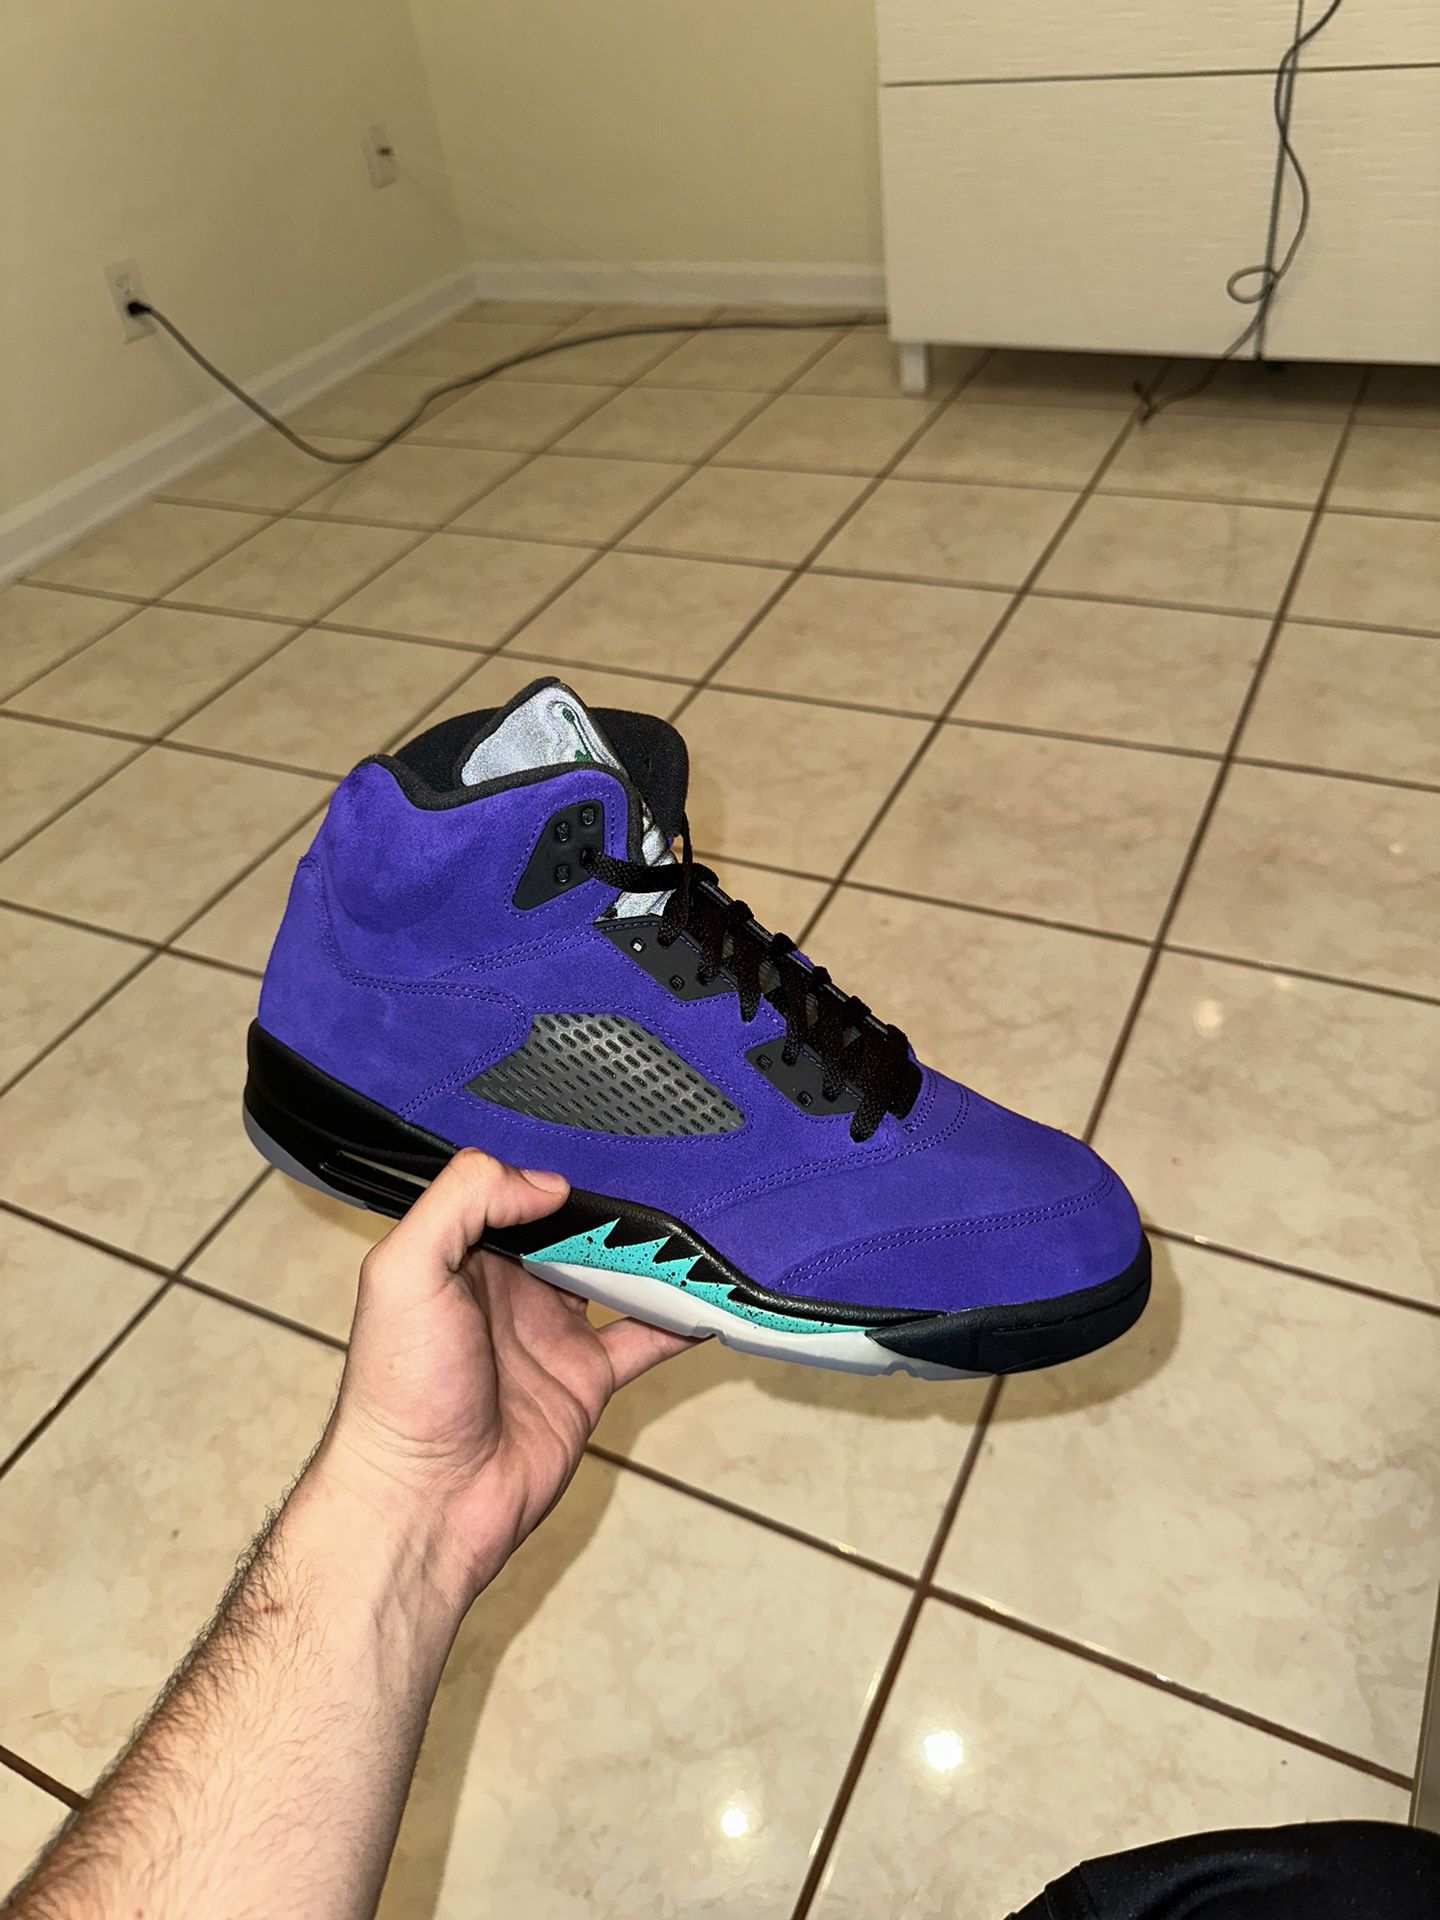 Jordan 5 Grape Size 11